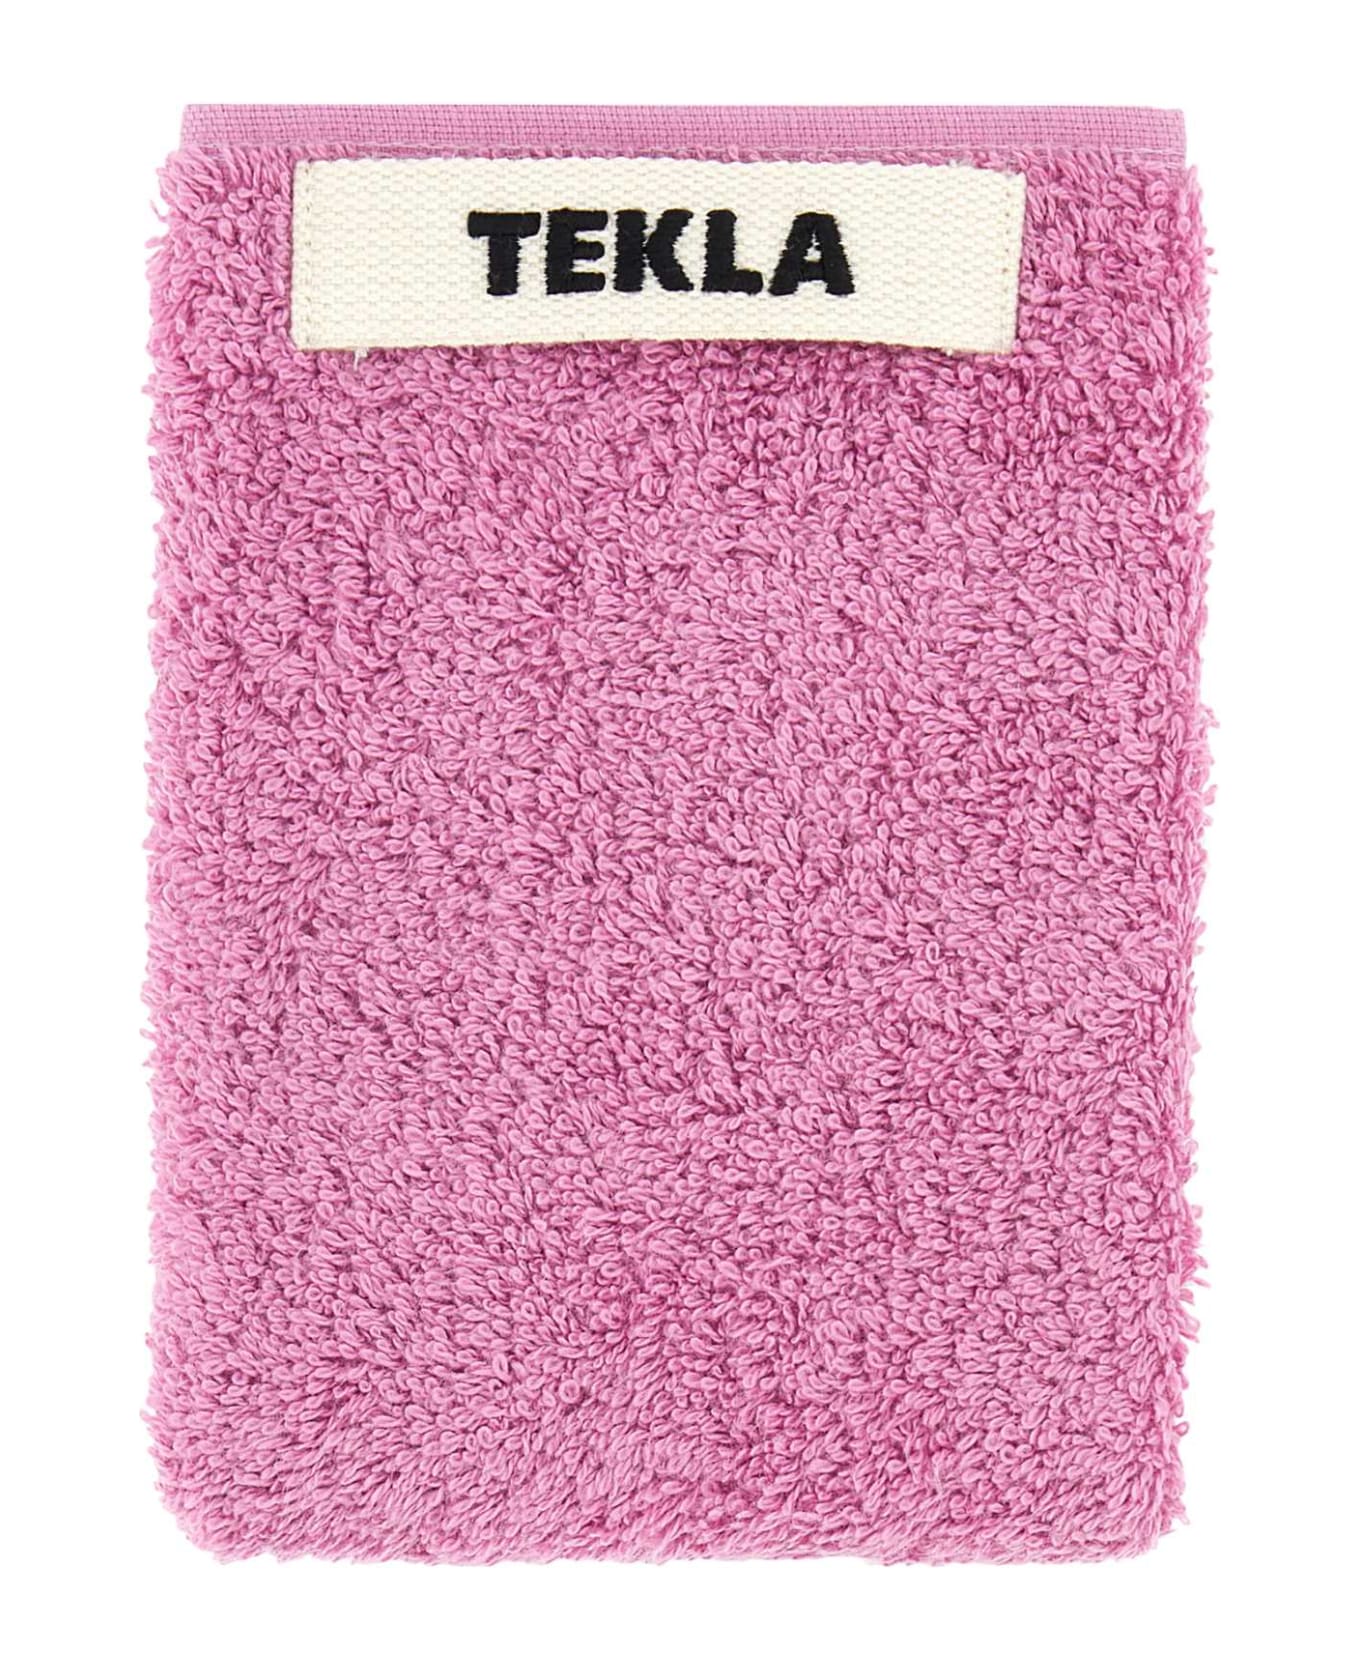 Tekla Dark Pink Terry Towel - MAGENTA